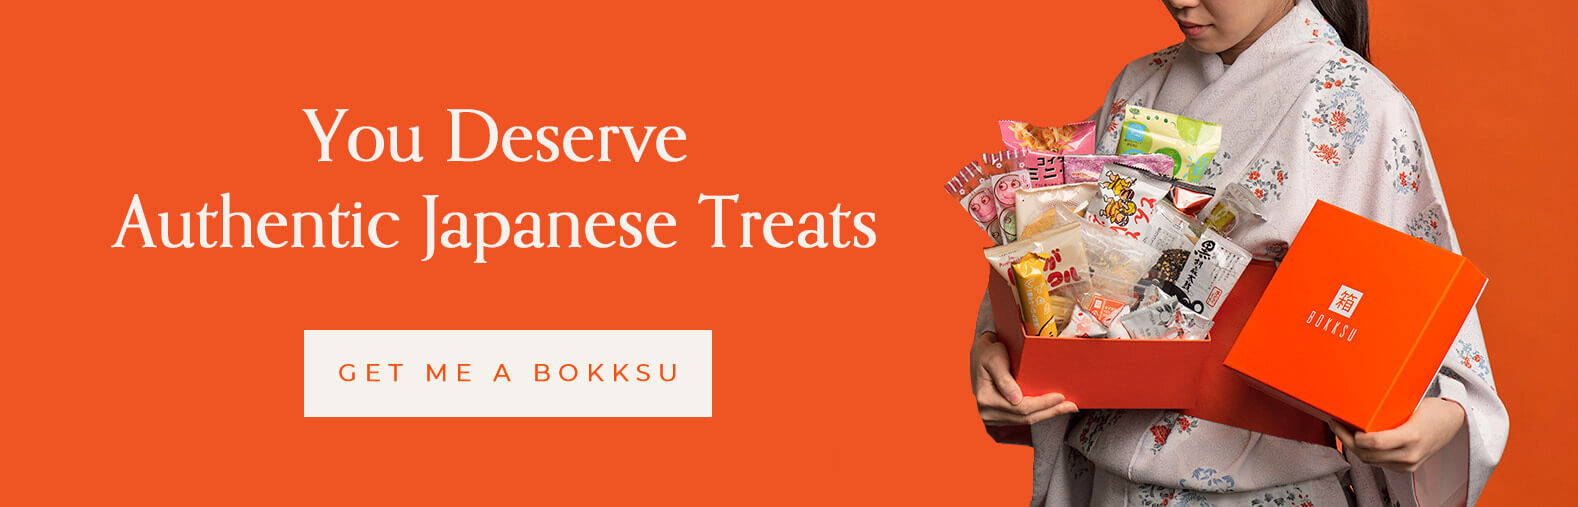 you deserve authentic japanese treats